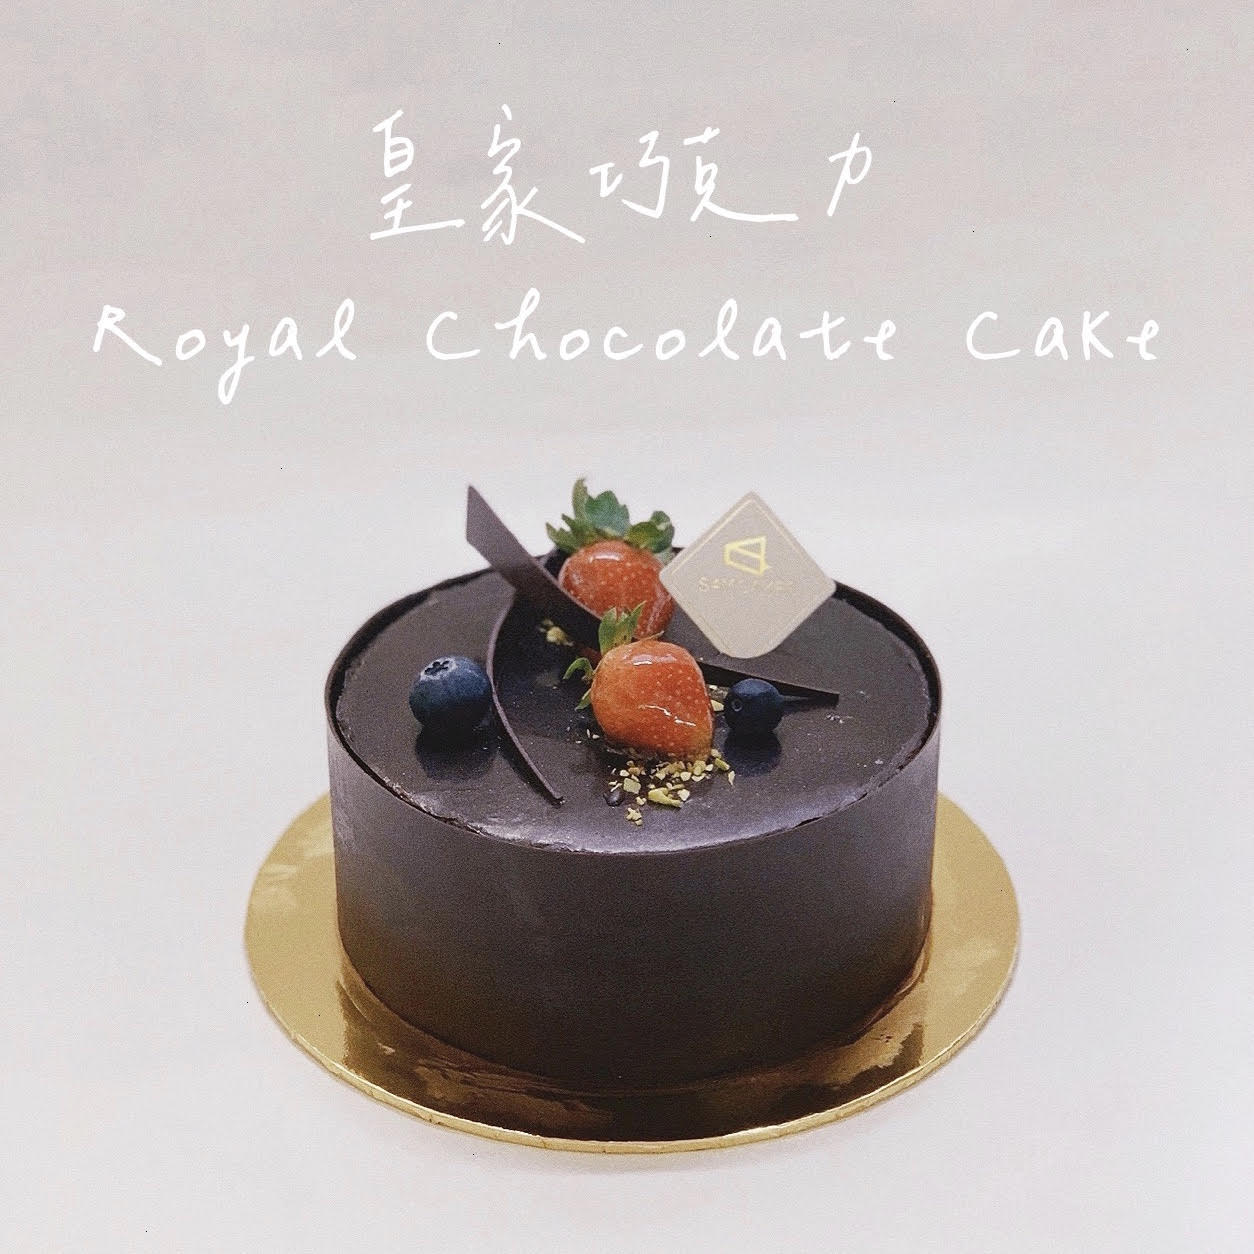 Buy/Send Royal Truffle Cake 1Kg Online- FNP